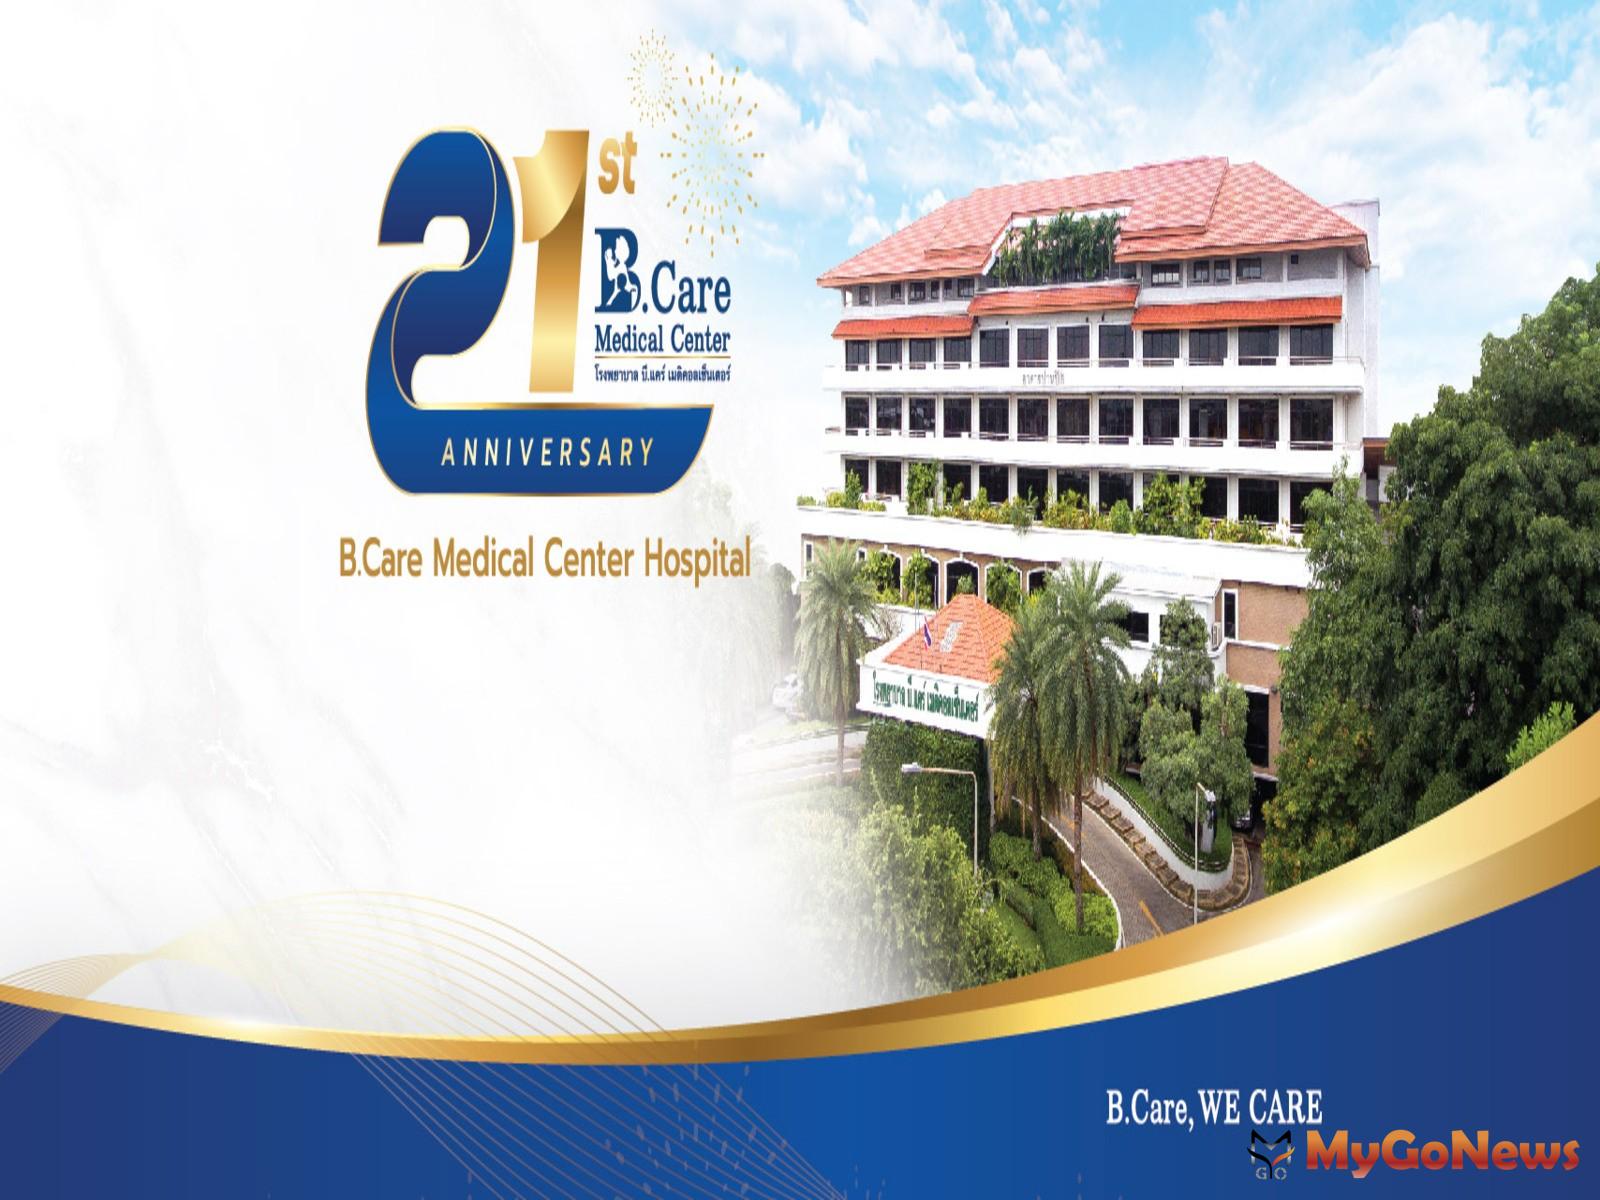 (B.Care Medical出處：B.Care Medical Center Hospital FB) MyGoNews房地產新聞 Global Real Estate